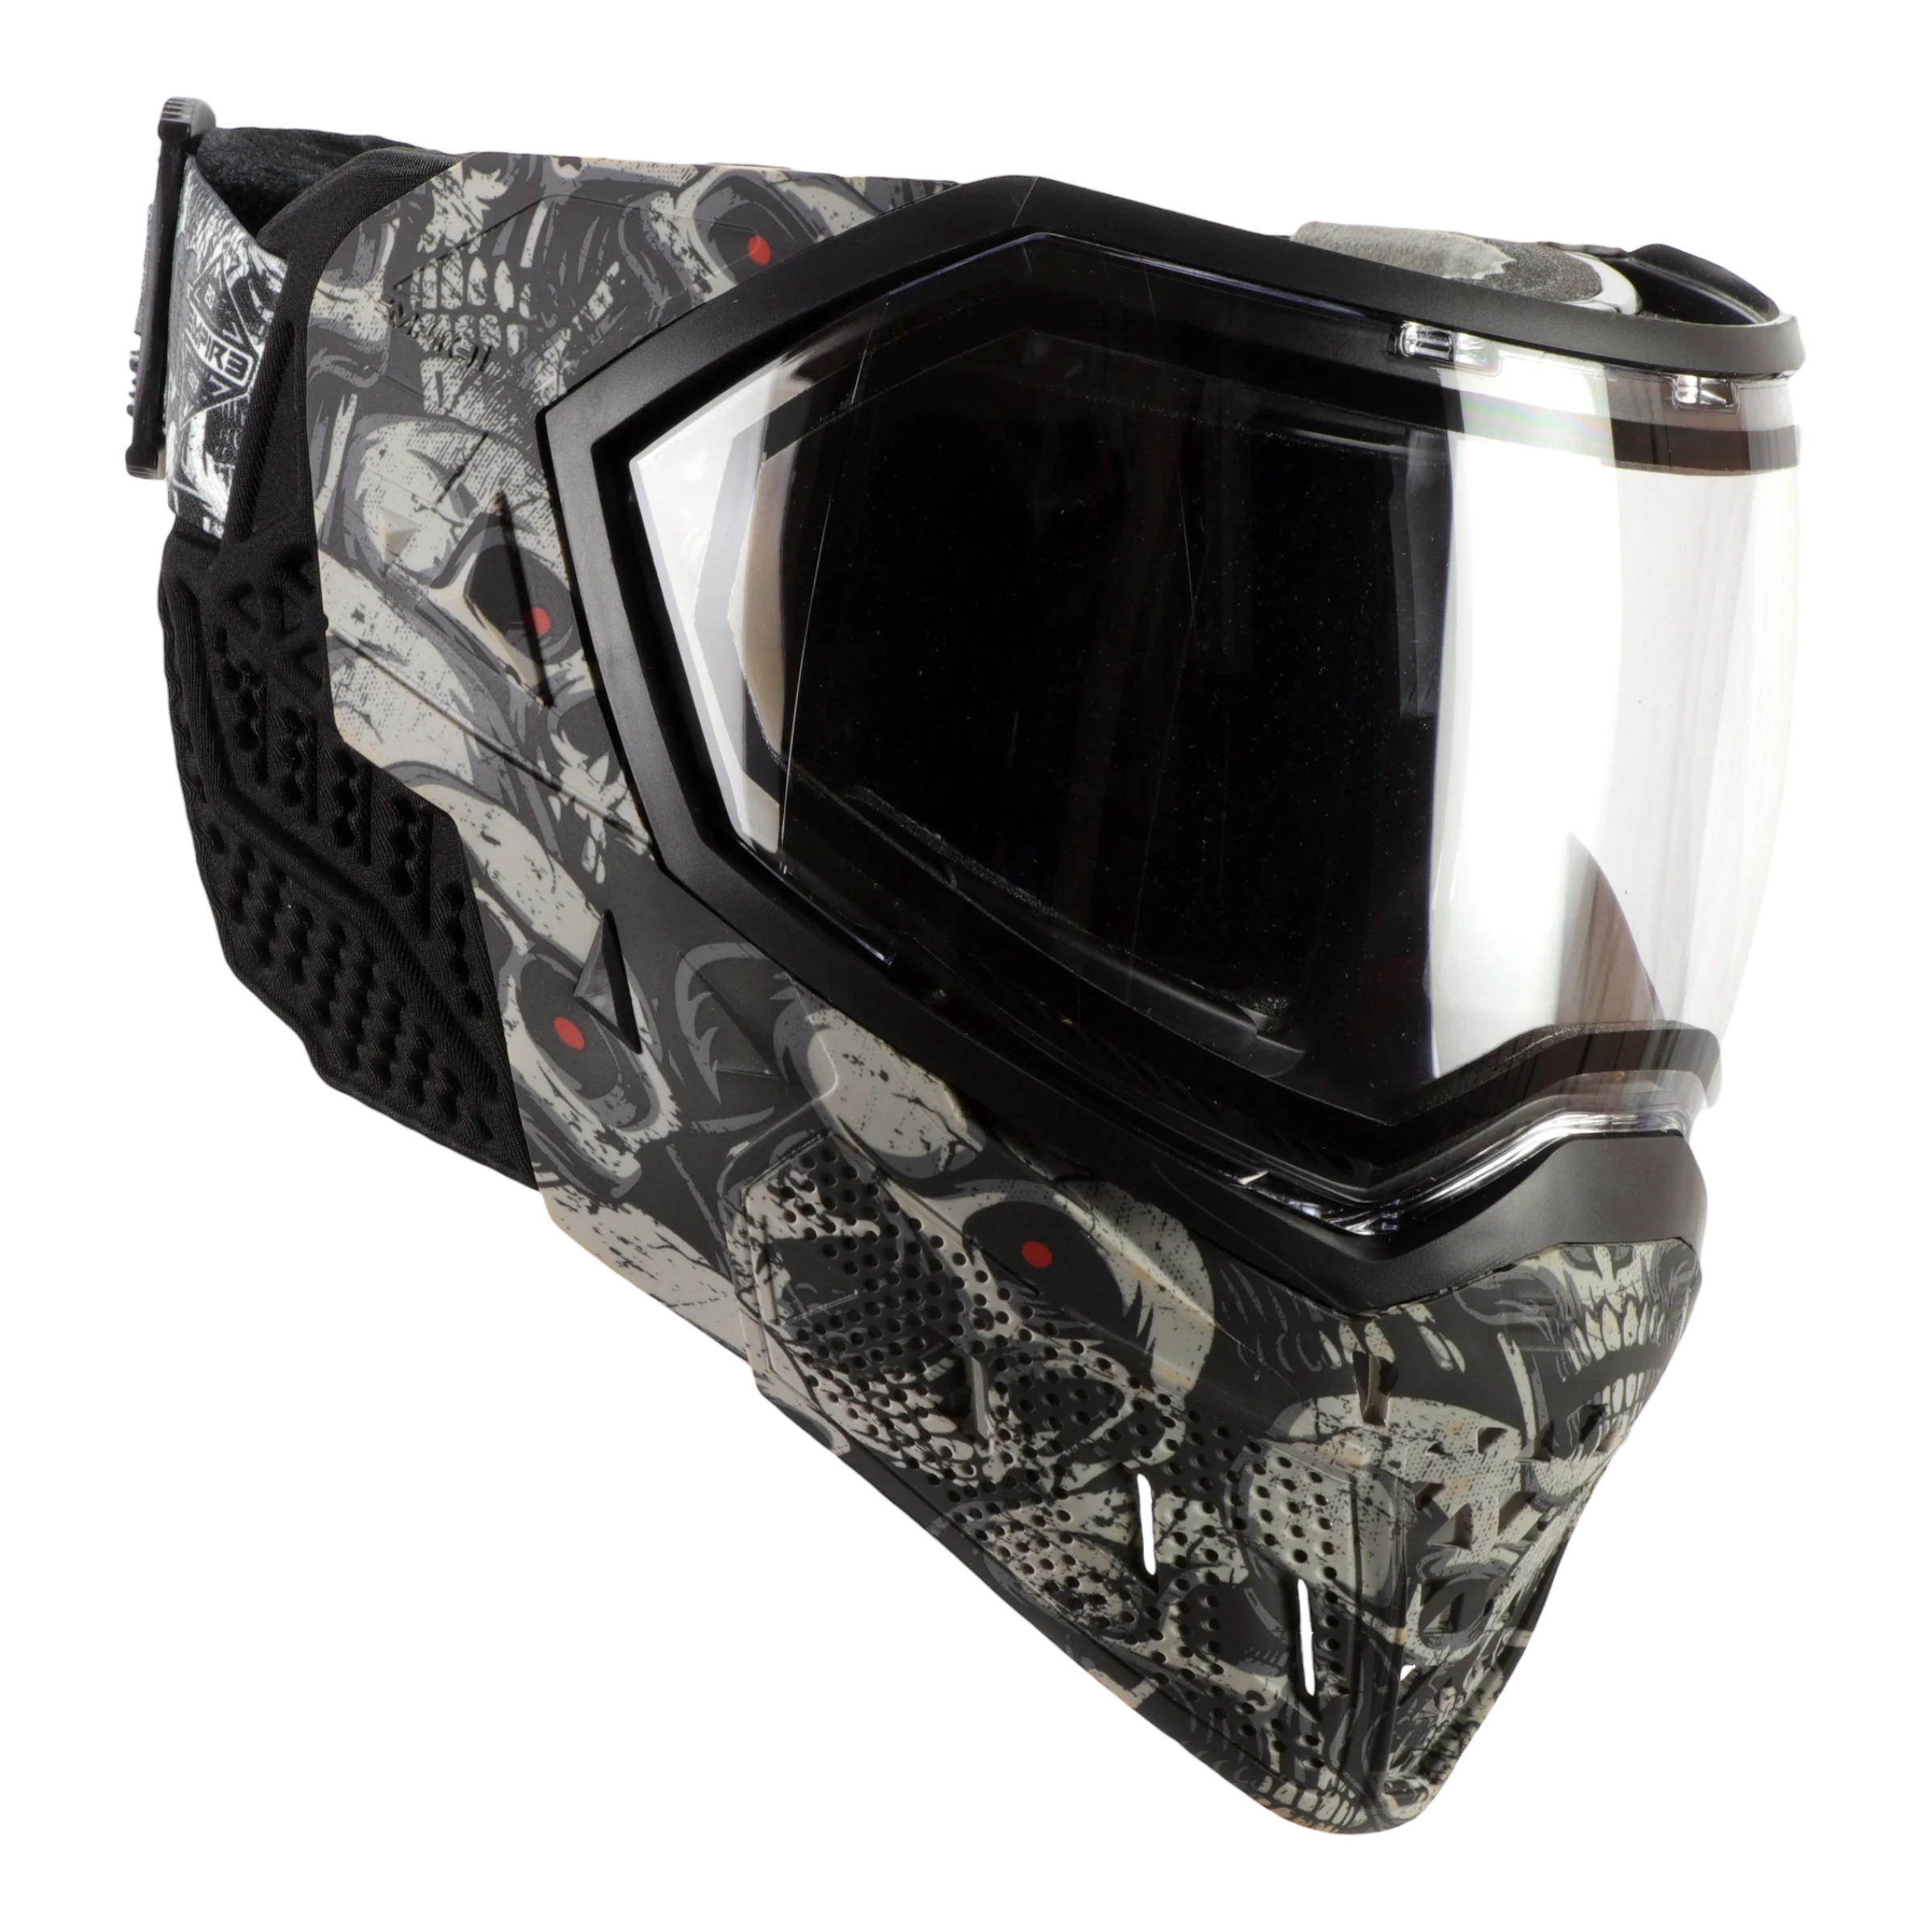 Empire EVS Goggle Skulls LE (Damage) - Thermal Ninja / Thermal Clear Lens